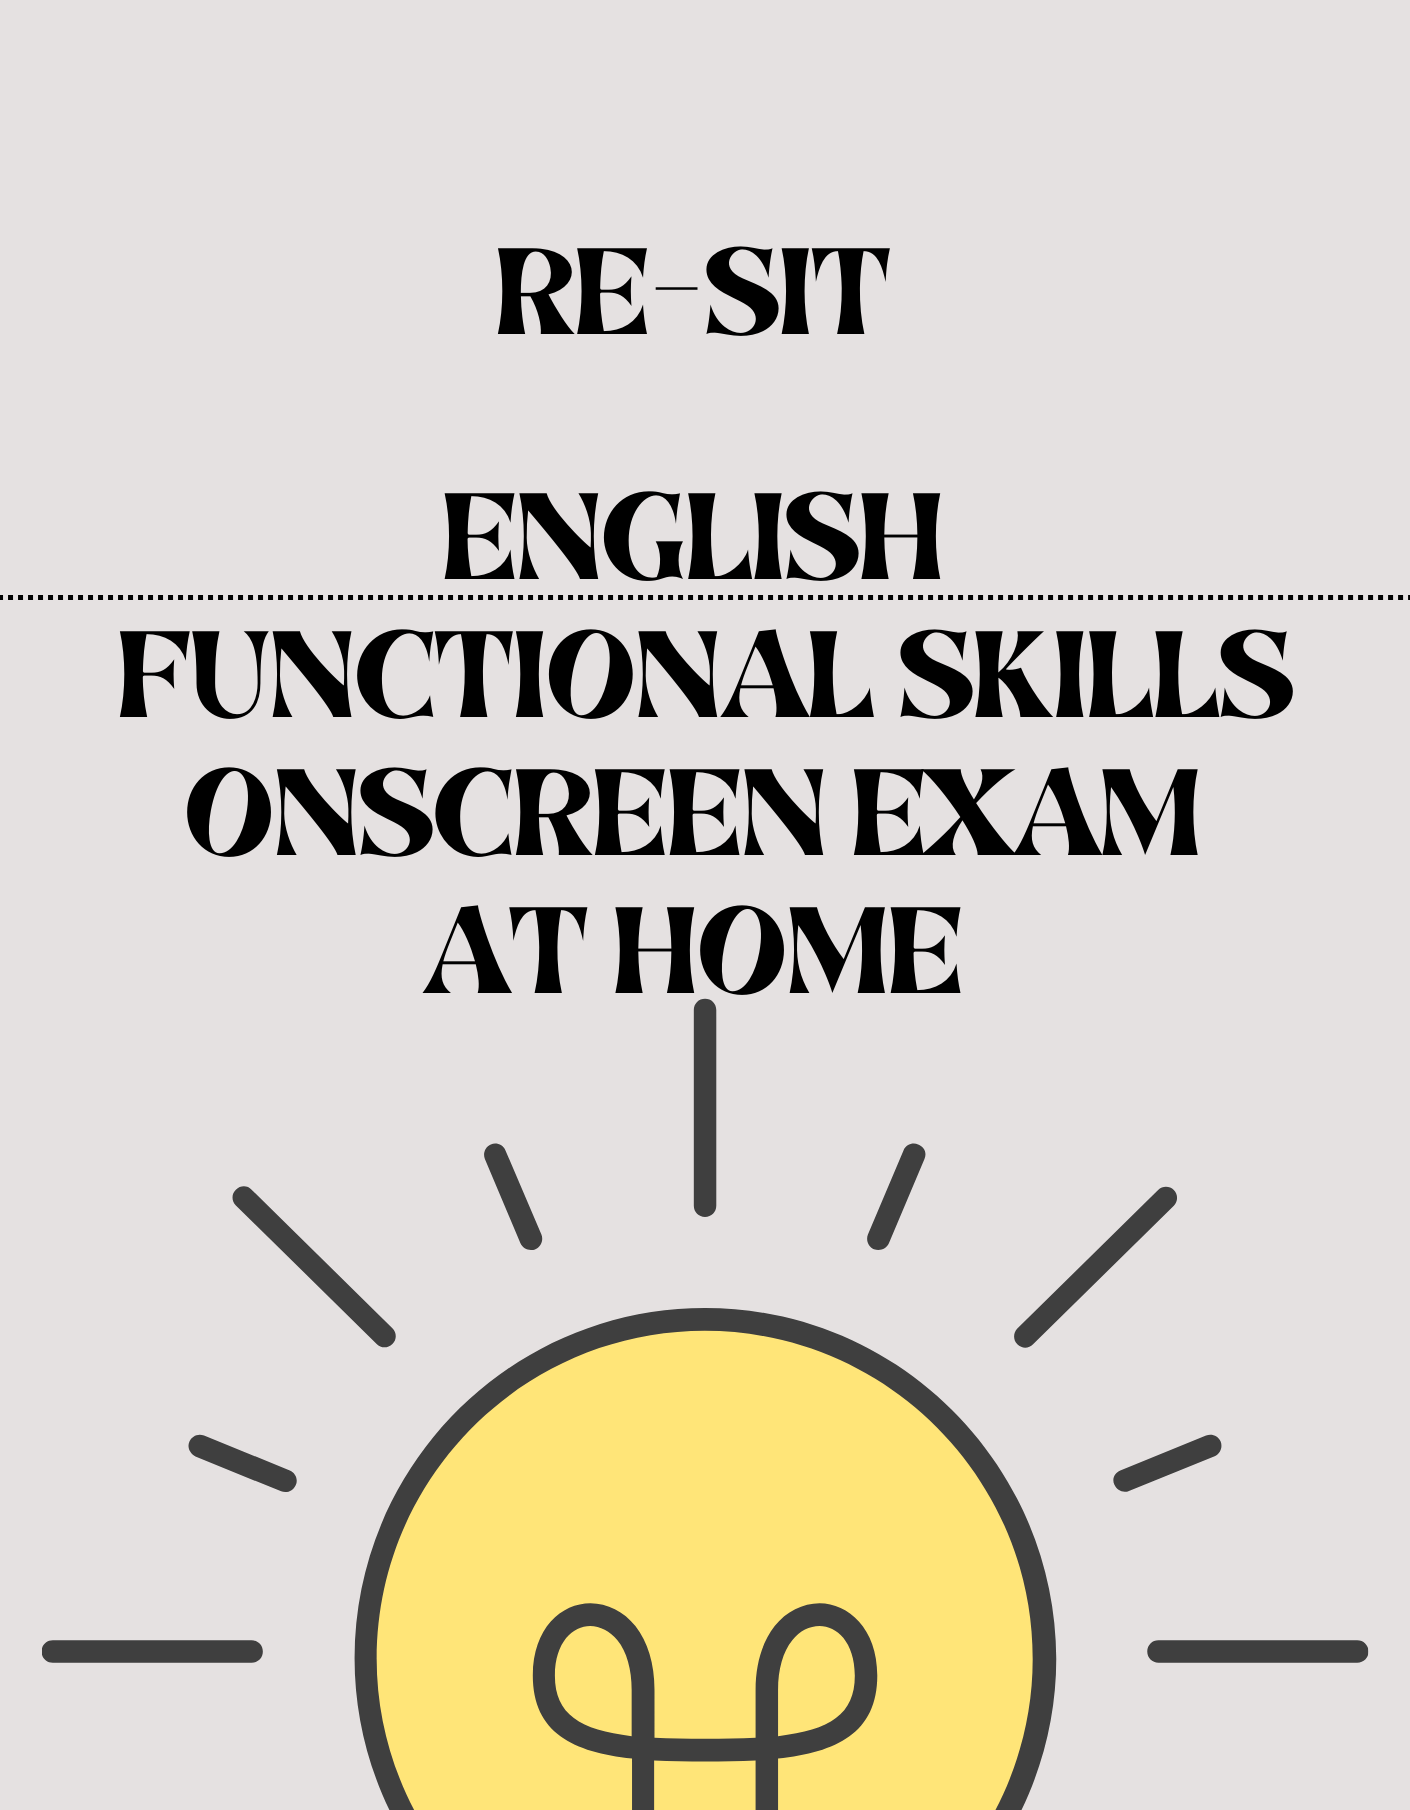 Re-sit English Functional Skills Onscreen Exam - At Home.